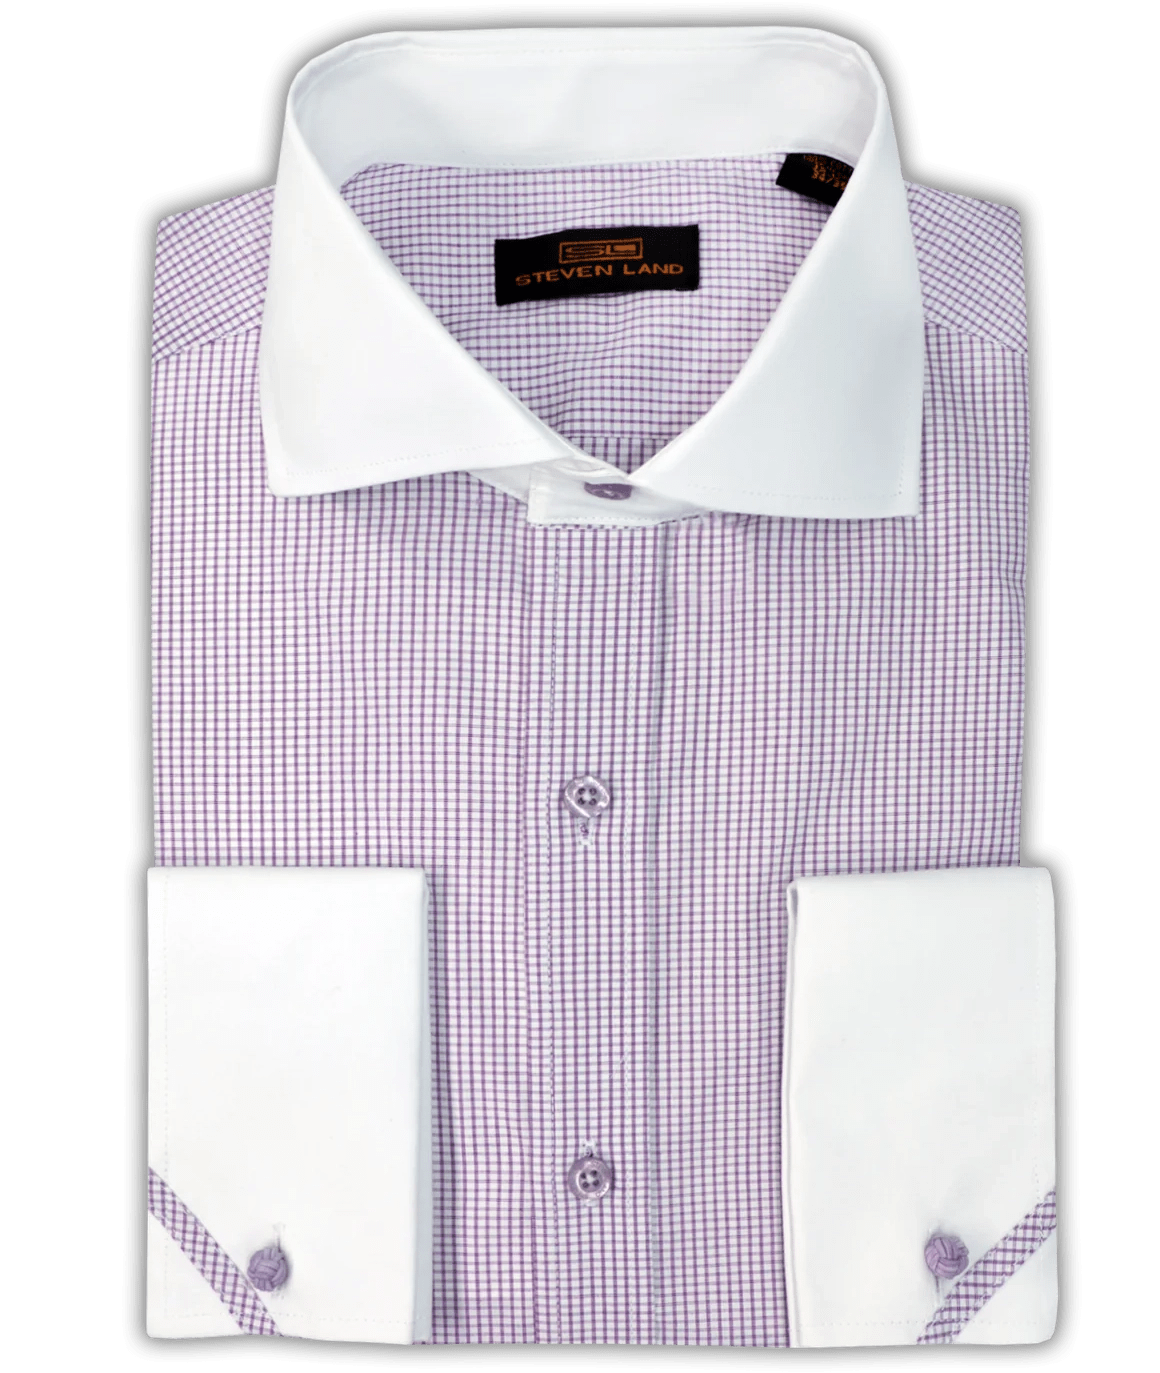 LND NECKWEAR INC. S C LAV 34/5 / 15.5 Steven Land Dress shirt | Lowell | Spread Collar | Button Cuff | 100% Cotton/Ds2316